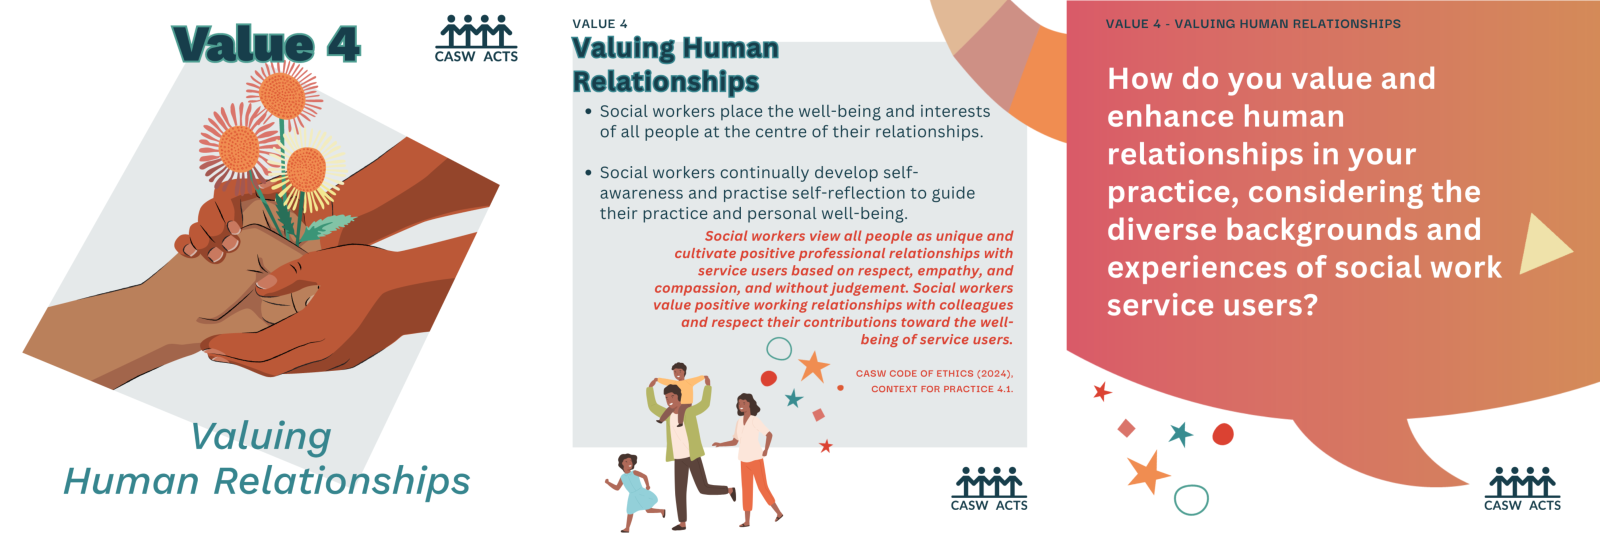 Value 4: Valuing Human Relationships